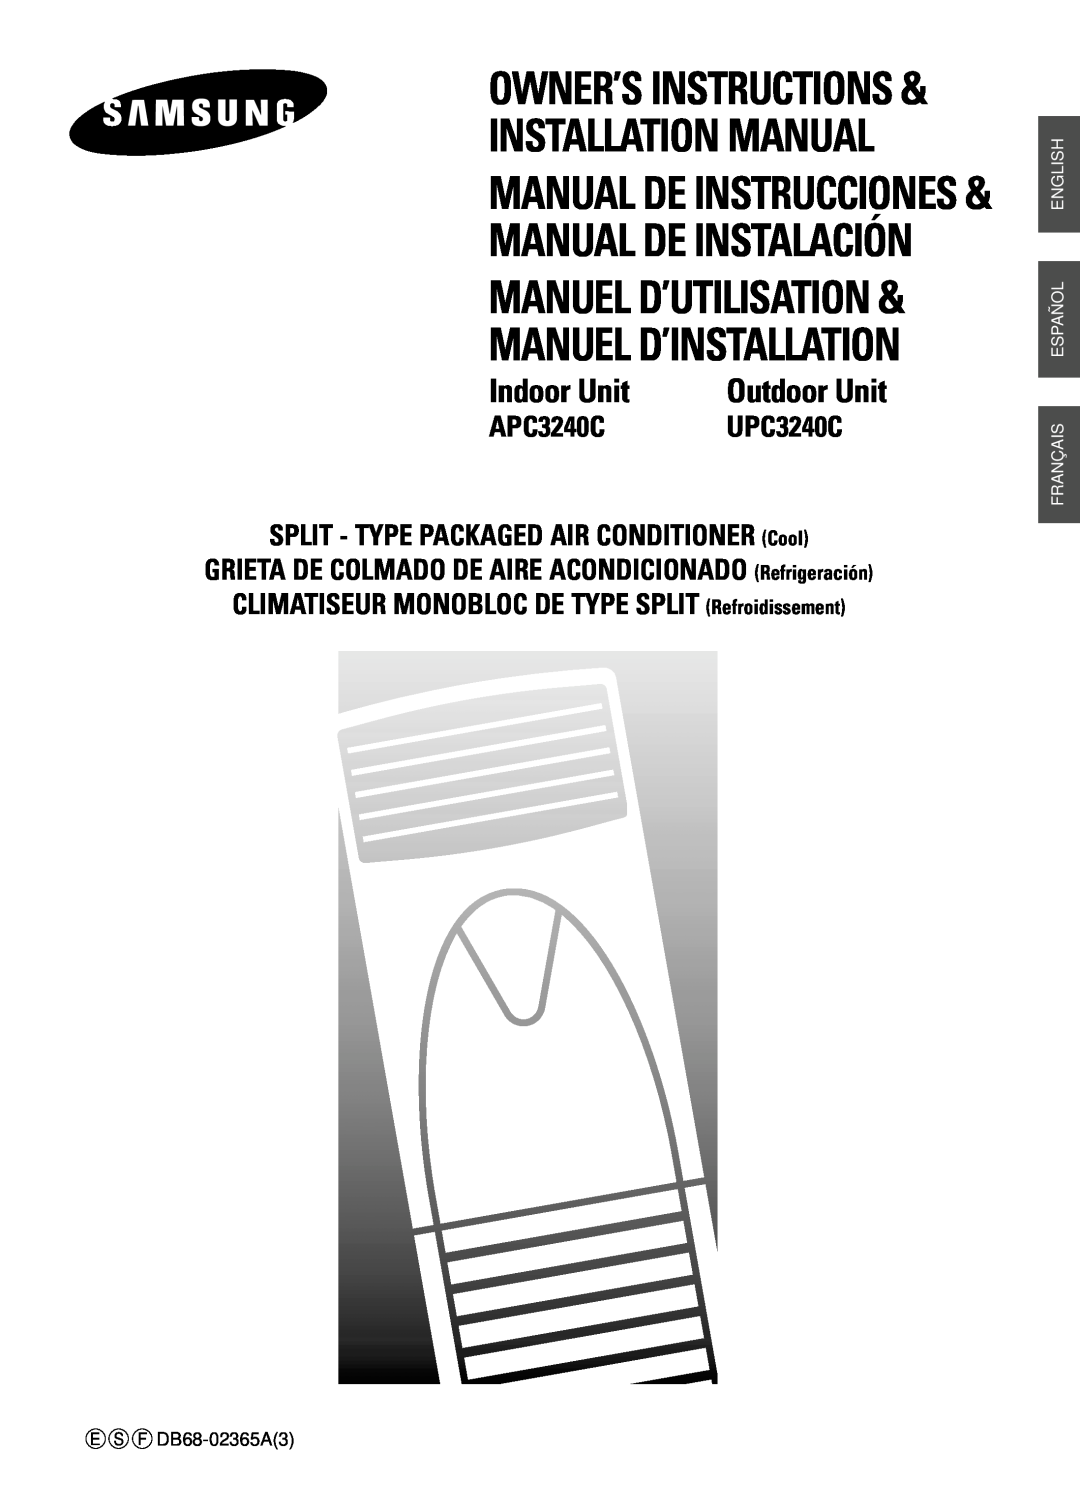 Samsung APC3240C installation manual UPC3240C, SPLIT - TYPE PACKAGED AIR CONDITIONER Cool, Outdoor Unit, Indoor Unit 